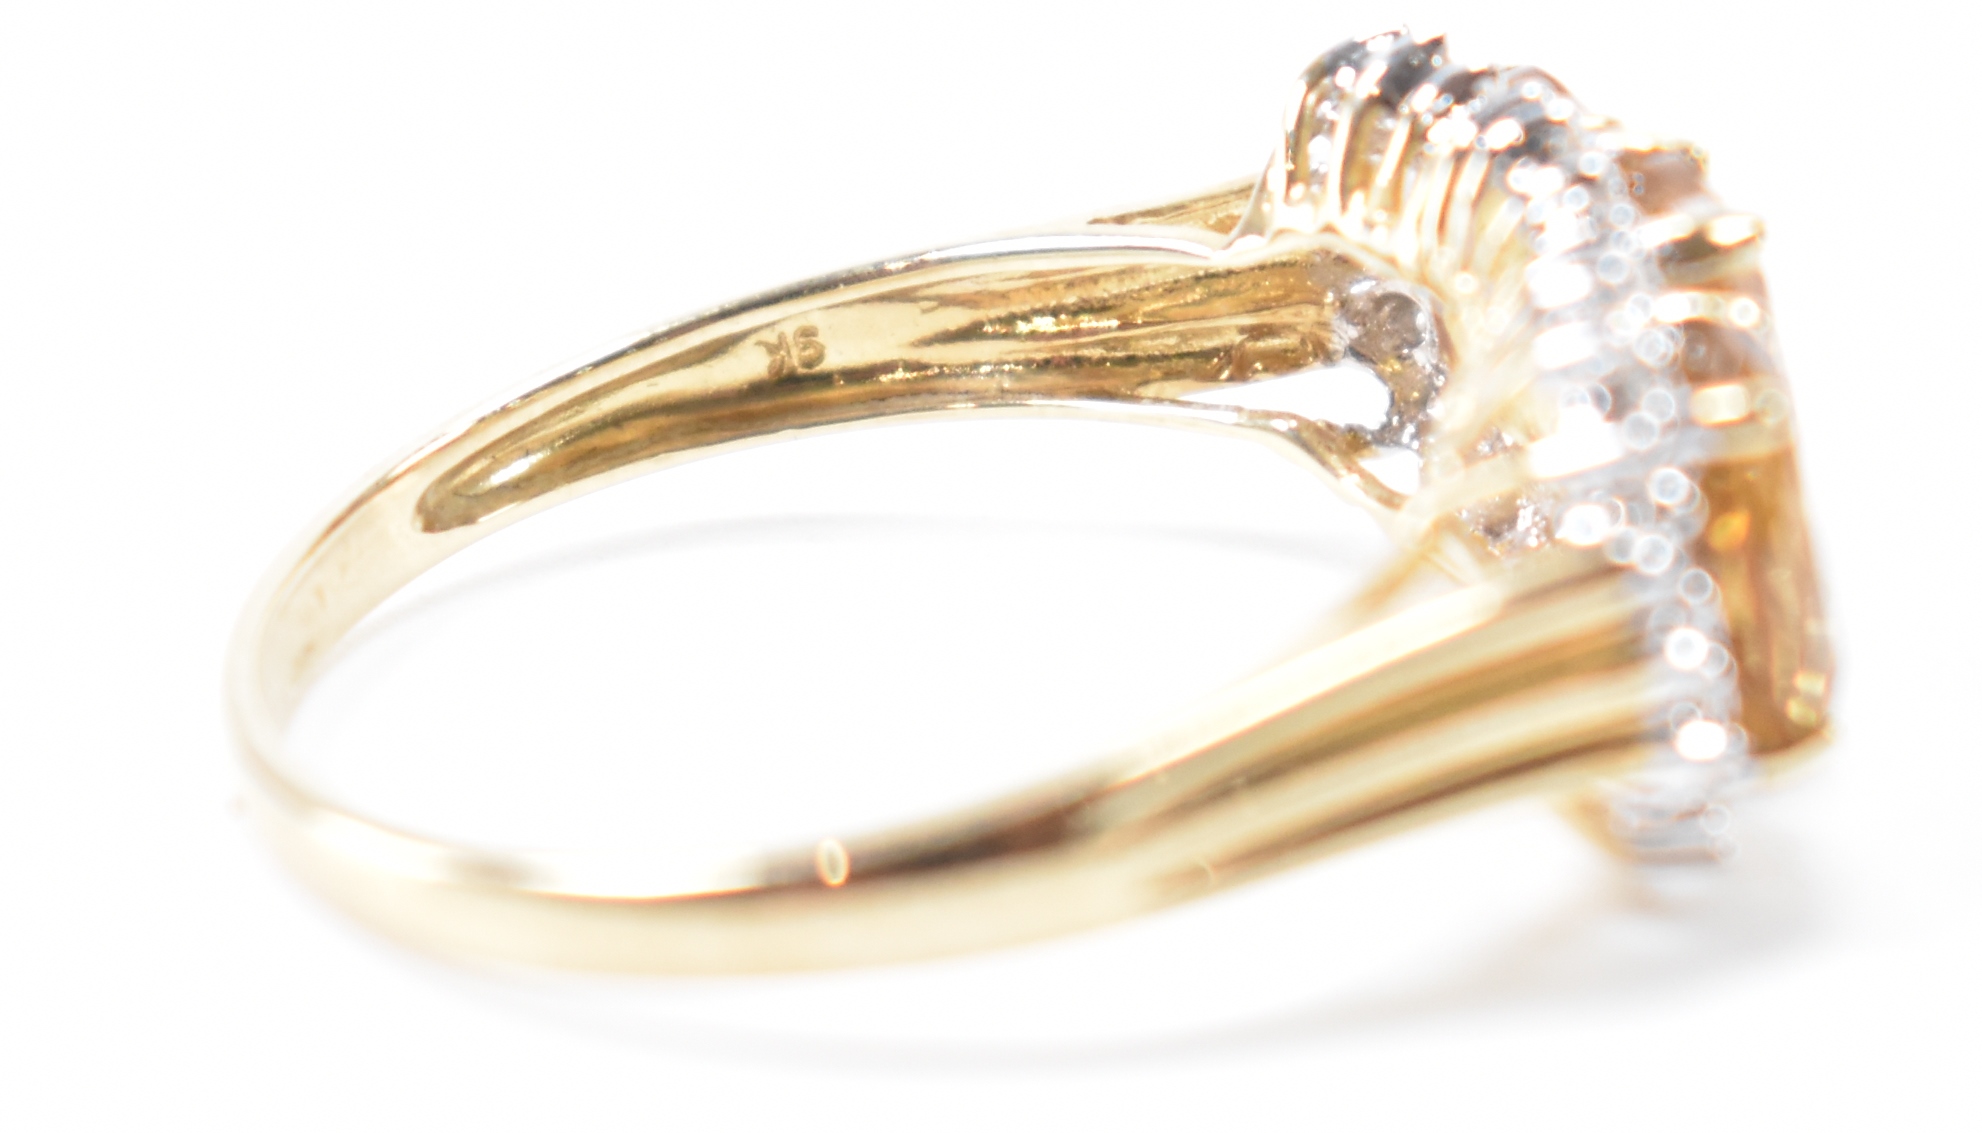 HALLMARKED 9CT GOLD DIAMOND & YELLOW STONE RING - Image 6 of 9